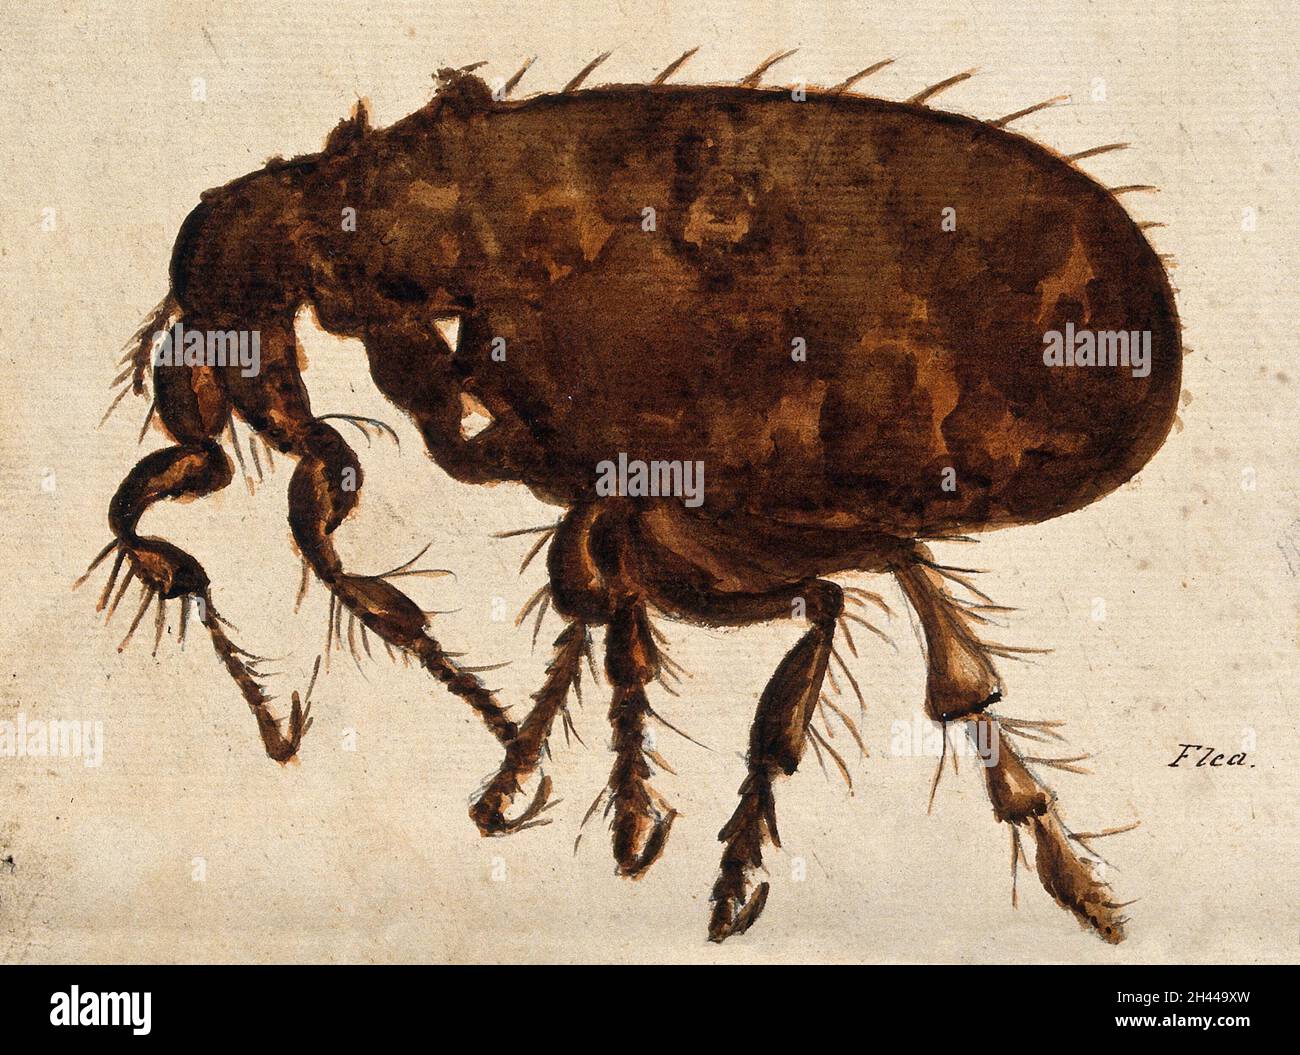 A flea (Siphonaptera species). Watercolour. Stock Photo